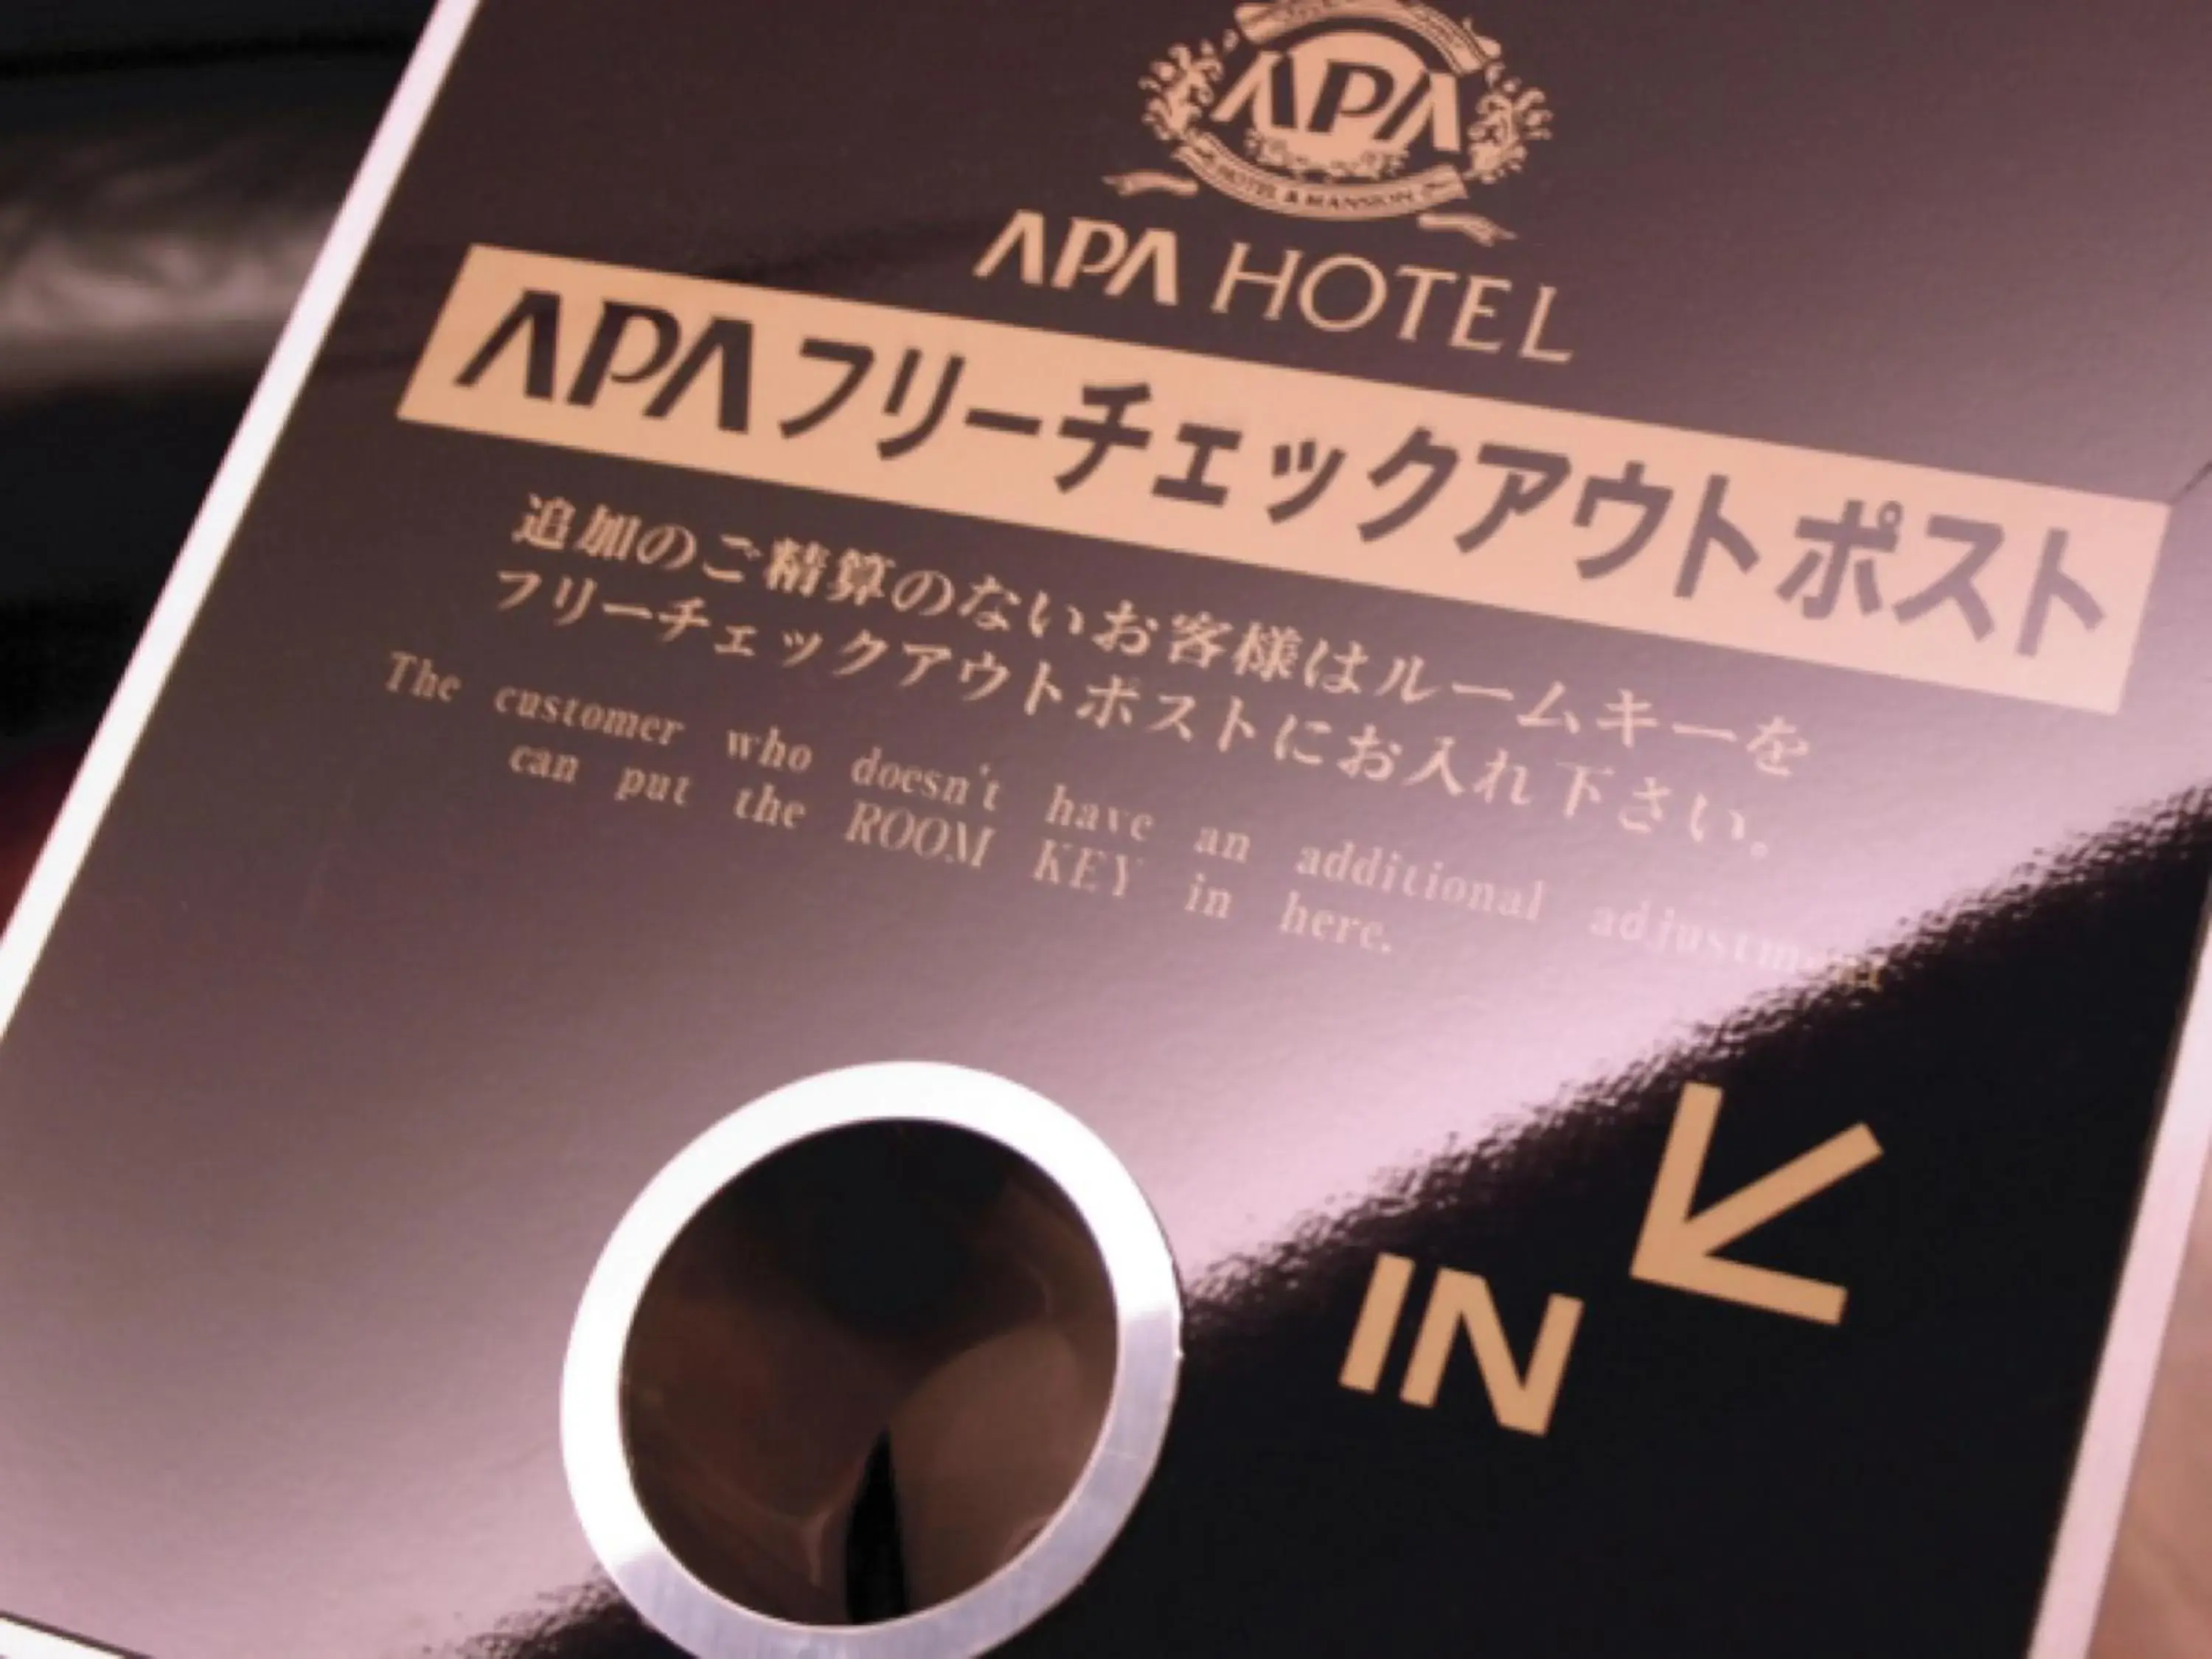 Other in Apa Hotel Aomori-Eki Higashi